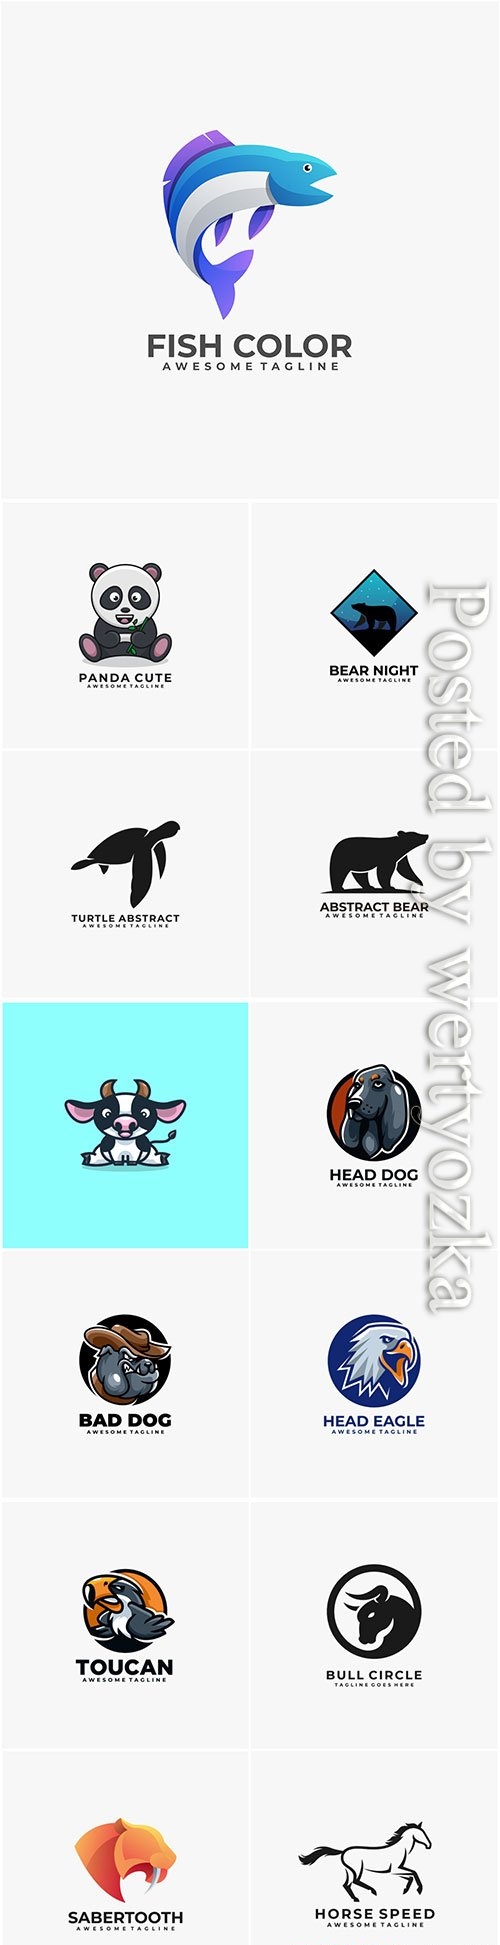 Animals and birds logos in vector